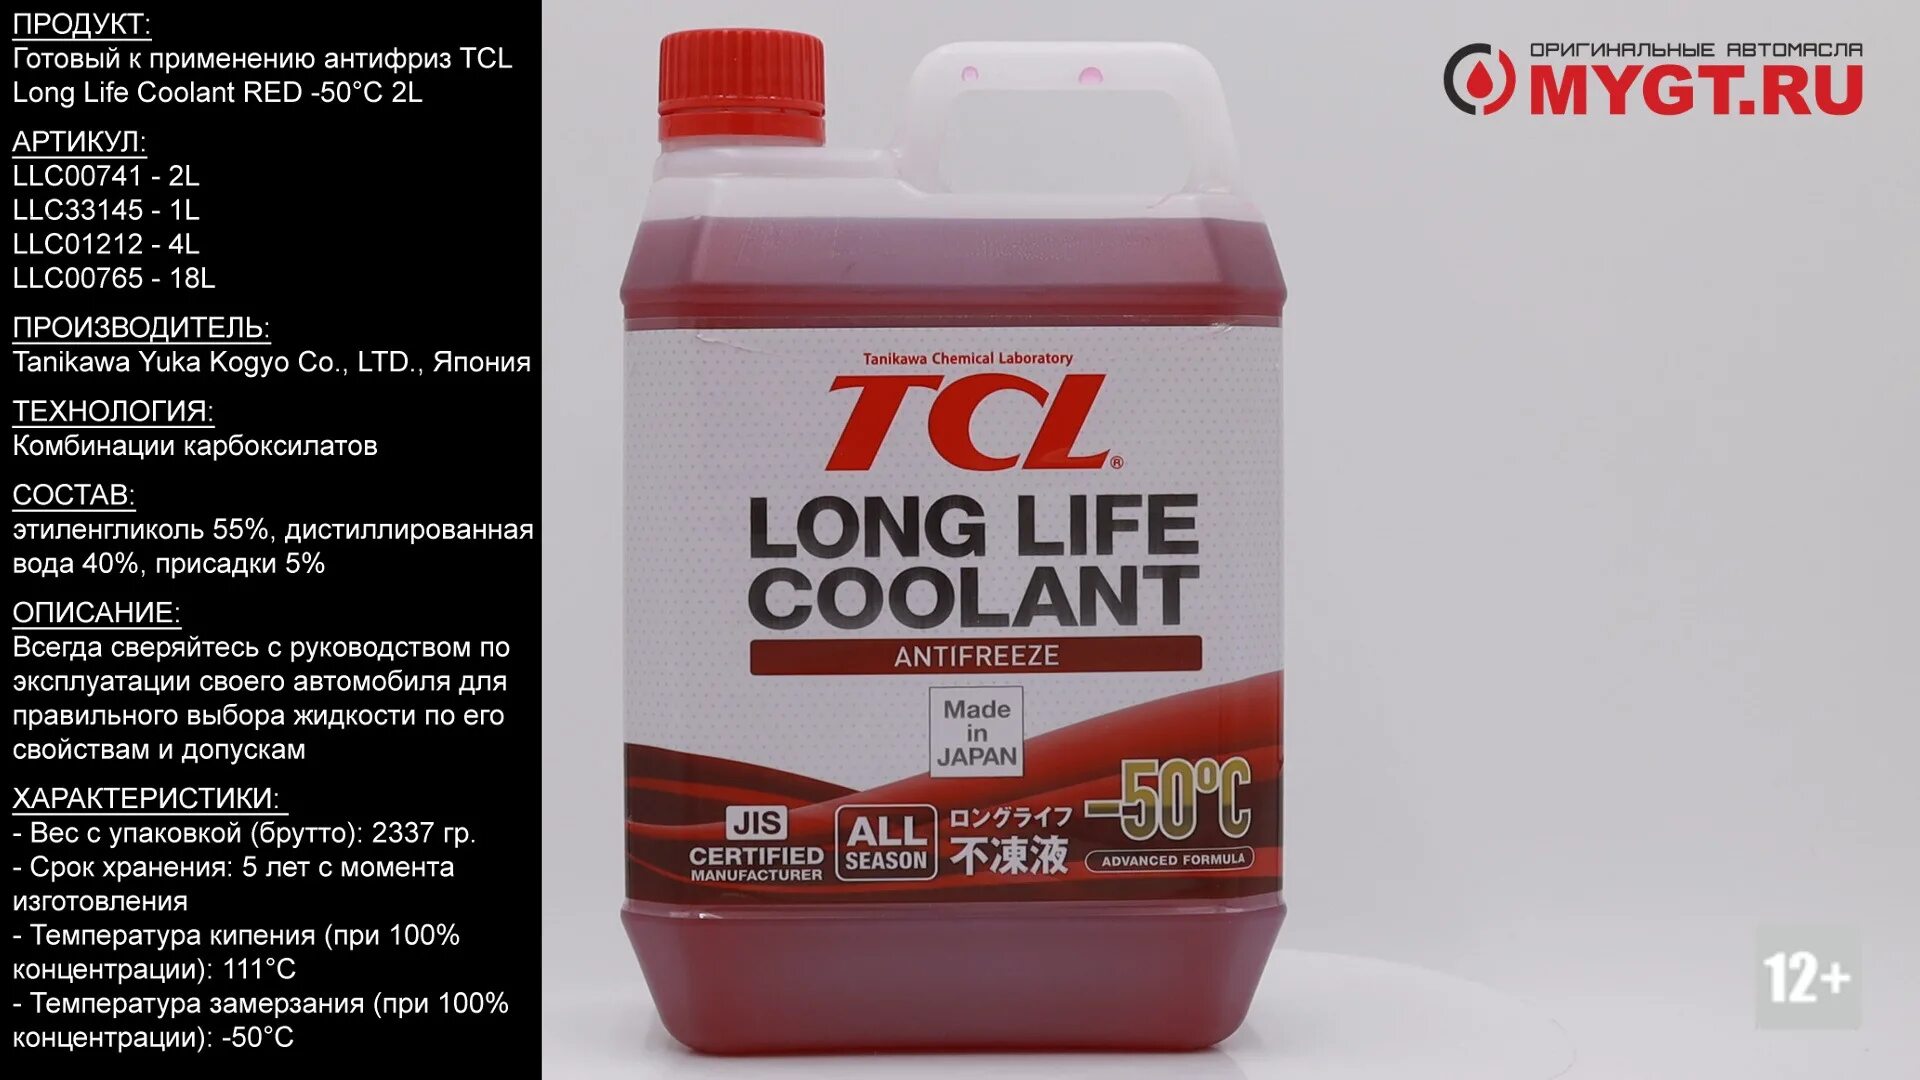 Tcl long life coolant. TCL LLC антифриз -40 Red 2l. Антифриз TCL LLC (long Life Coolant) -50. Антифриз TCL LLC Red -50. Антифриз TCL красный -50.